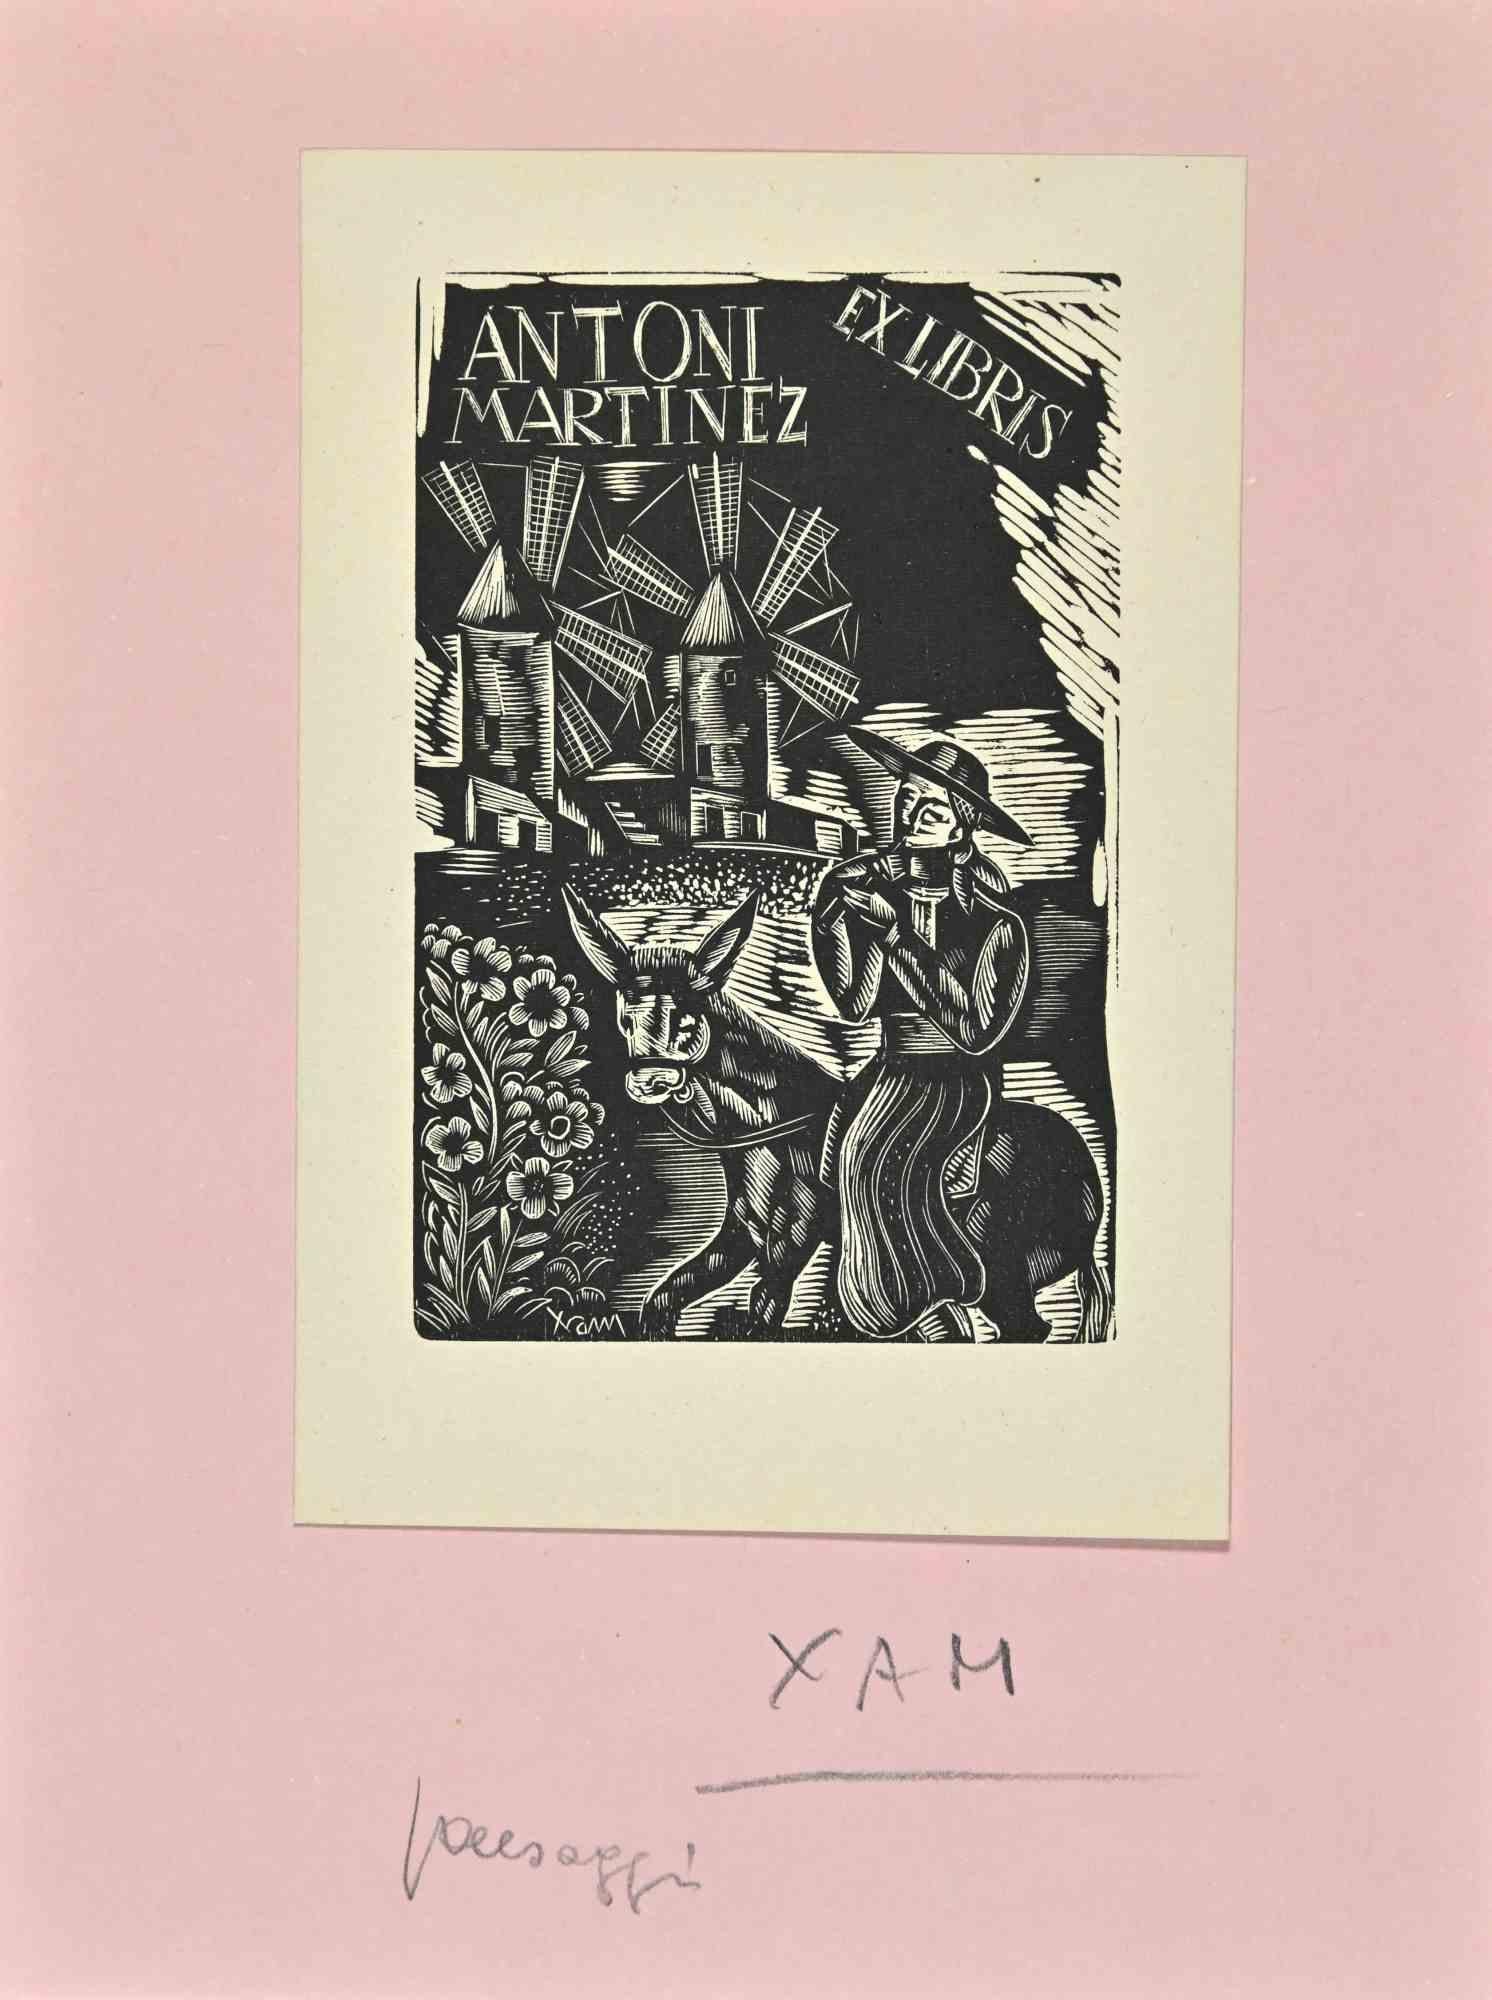 Unknown Figurative Print - Ex Libris - Antoni Martinez - Woodcut - Mid 20th Century